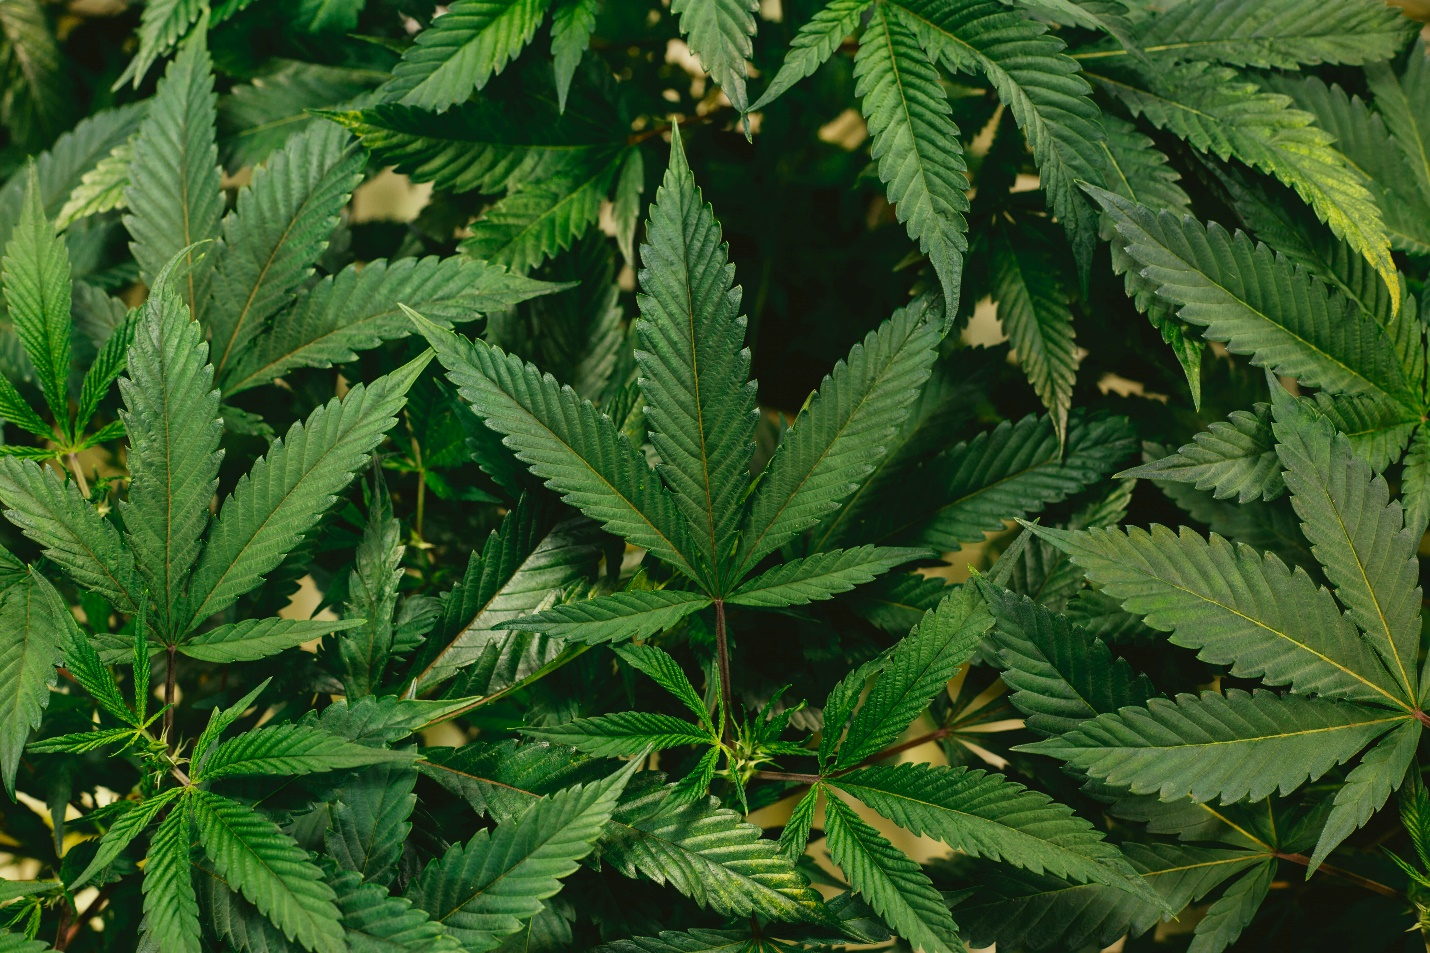 The close-up shot of marijuana leaves